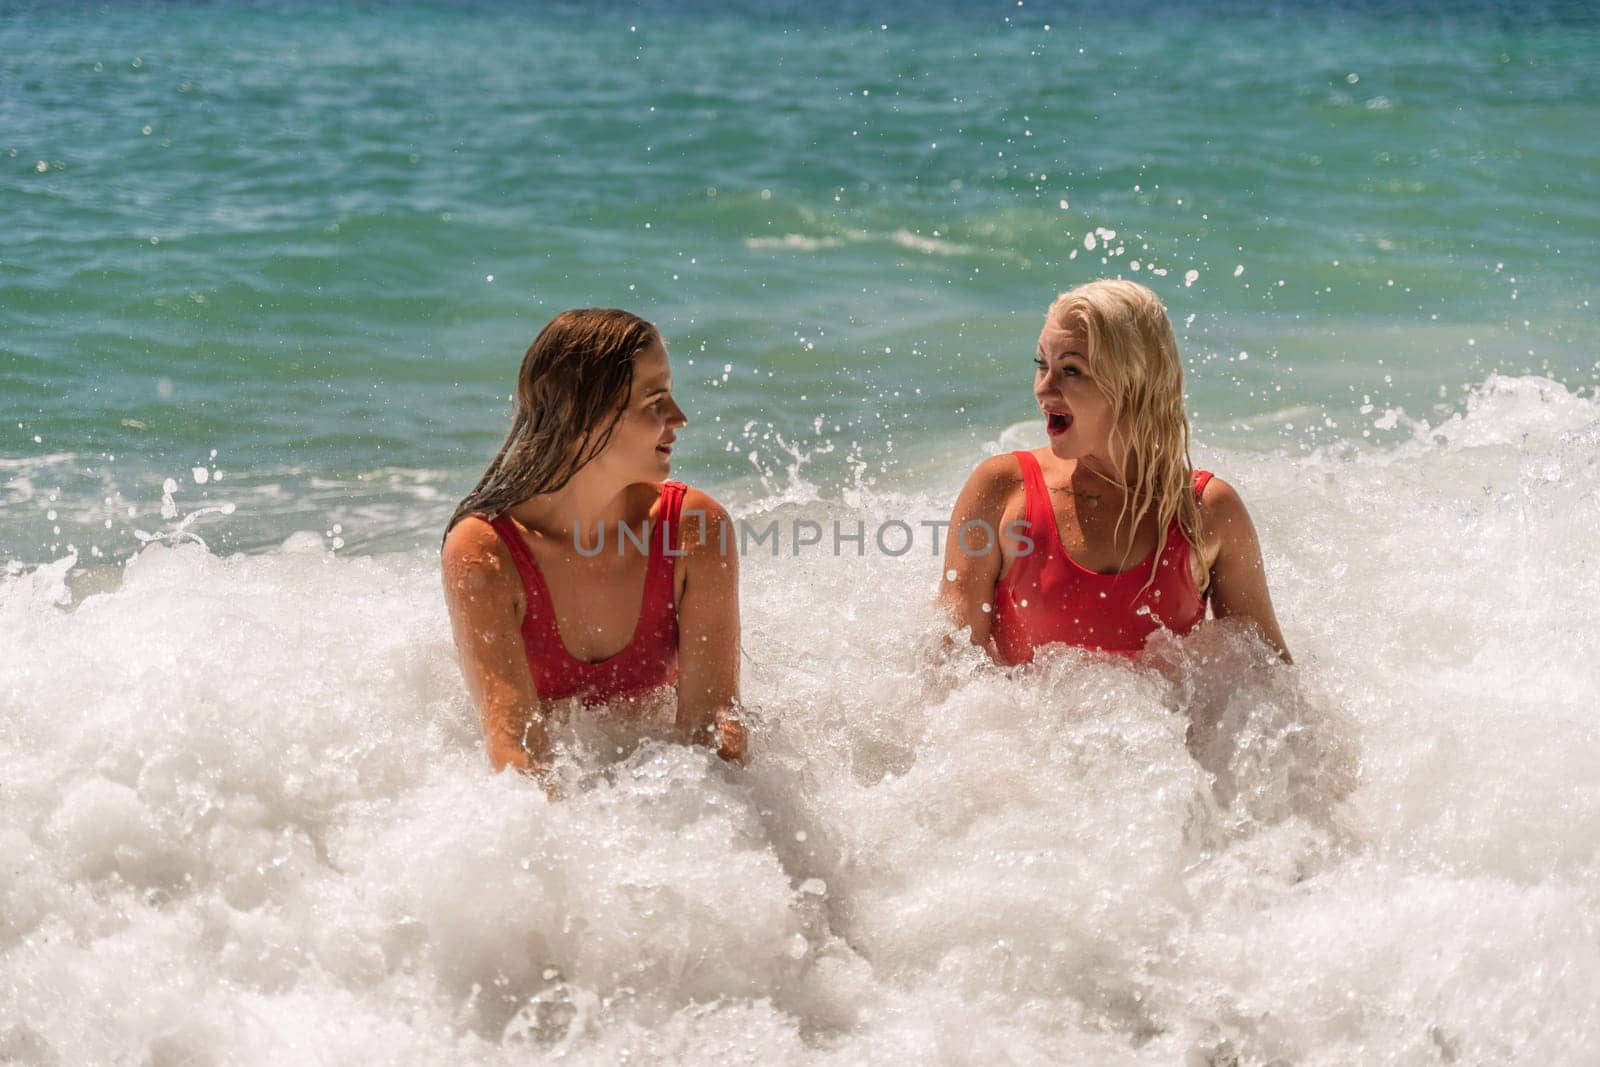 Women ocean play. Seaside, beach daytime, enjoying beach fun. Two women in red swimsuits enjoying themselves in the ocean waves